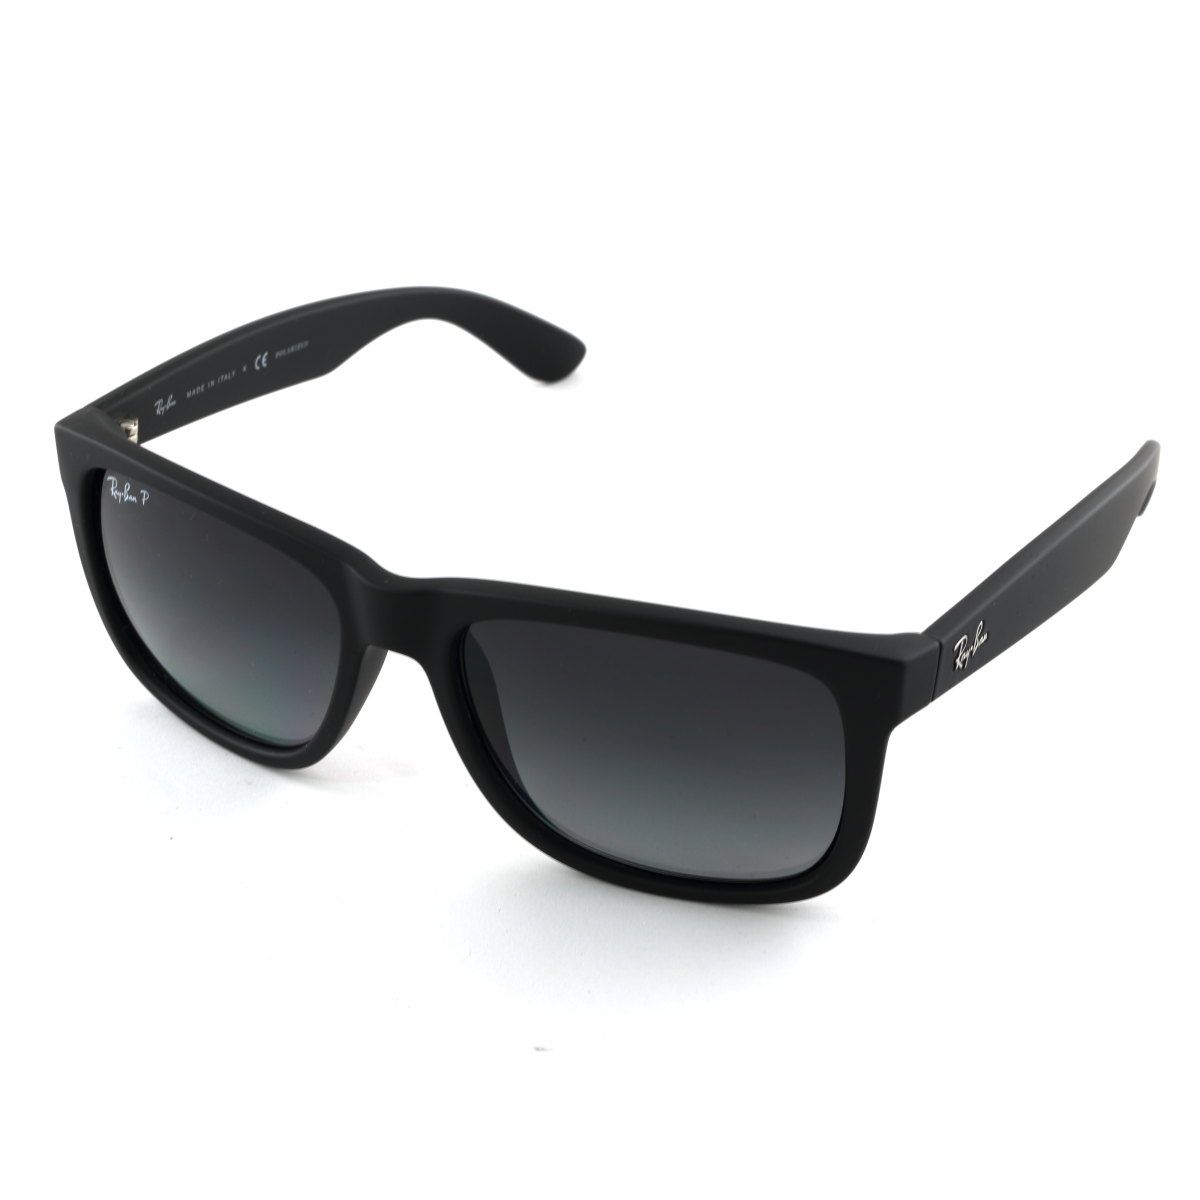 RB4165 Square Sunglasses 0622 T3 - size 55